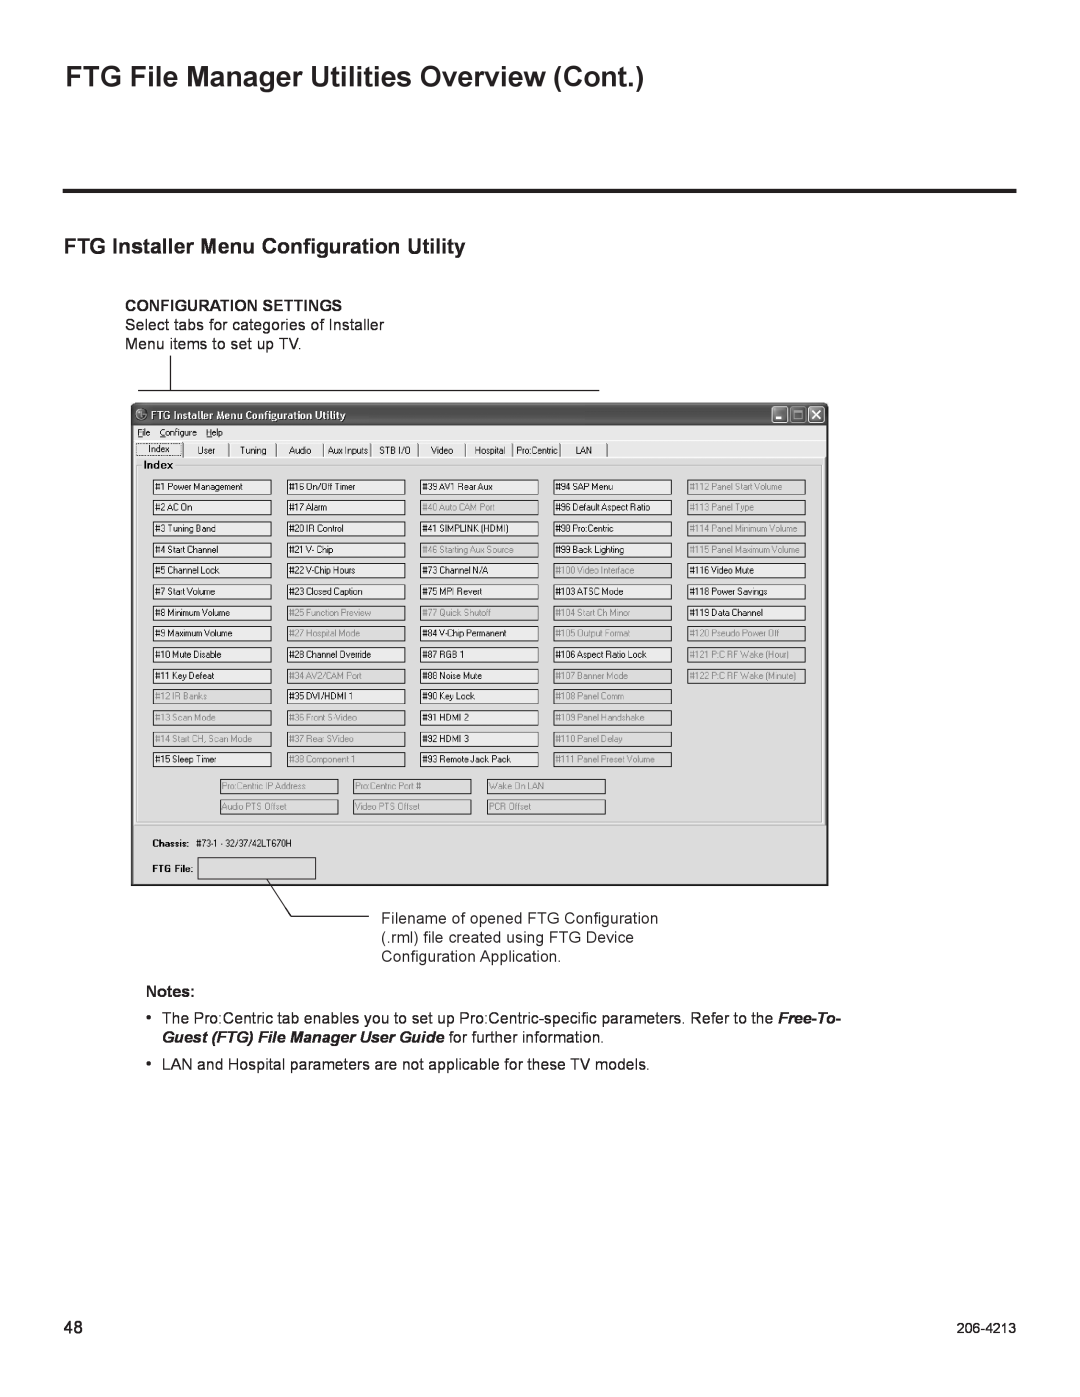 LG Electronics 32LT670H, 55LS675H FTG Installer Menu Configuration Utility, FTG File Manager Utilities Overview Cont 